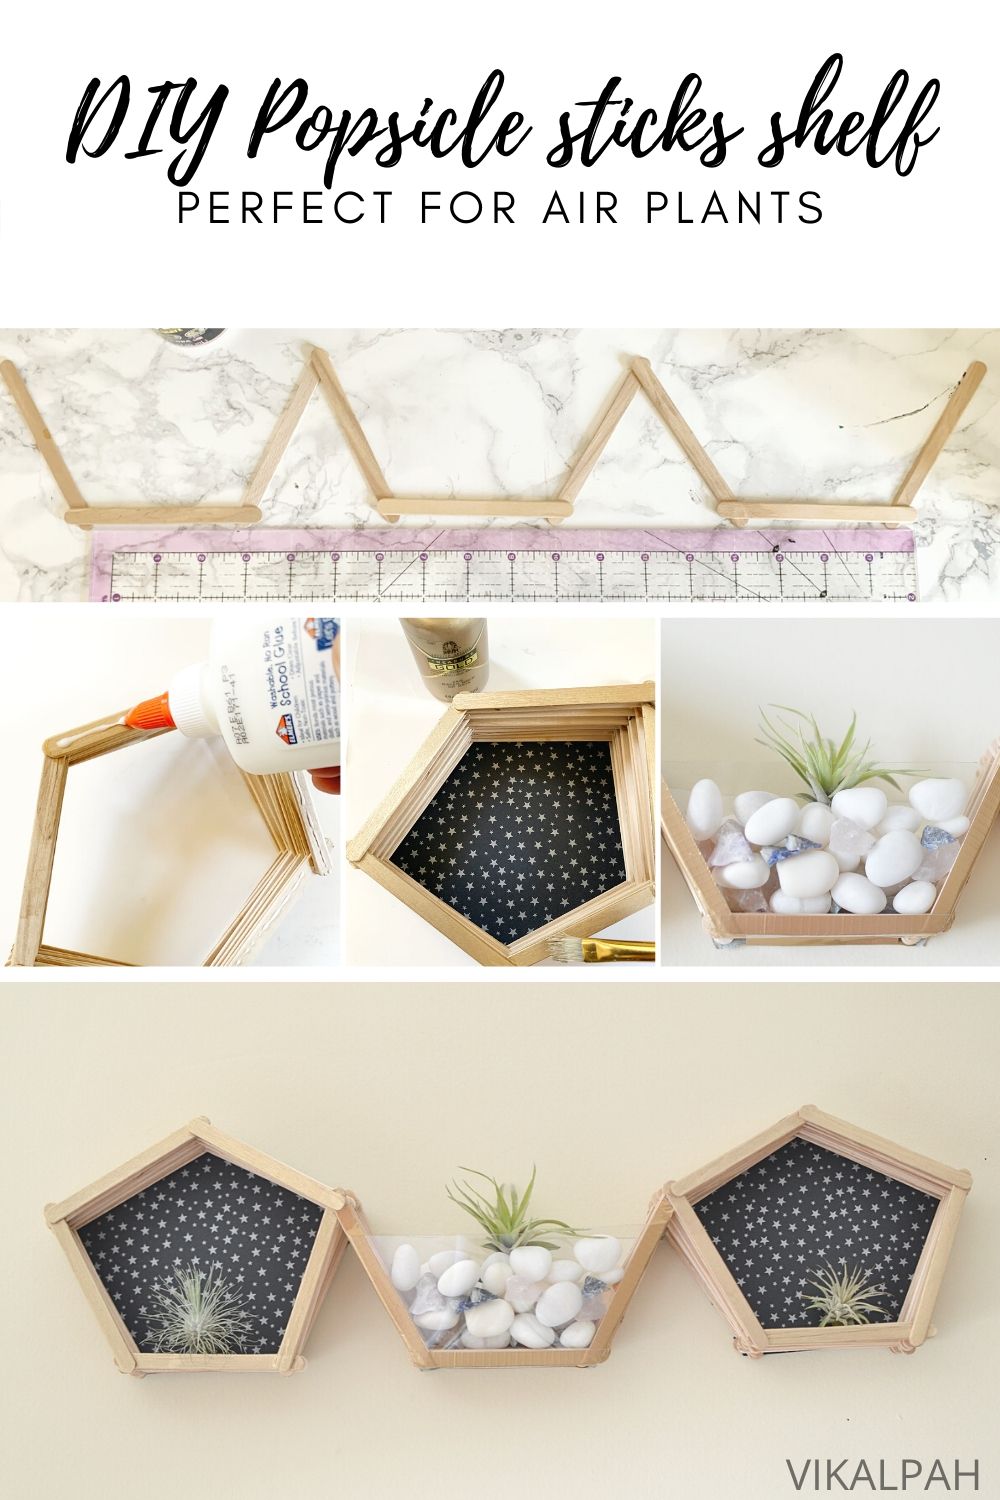 DIY wall shelf  How to make hexagon shelves using popsicle sticks